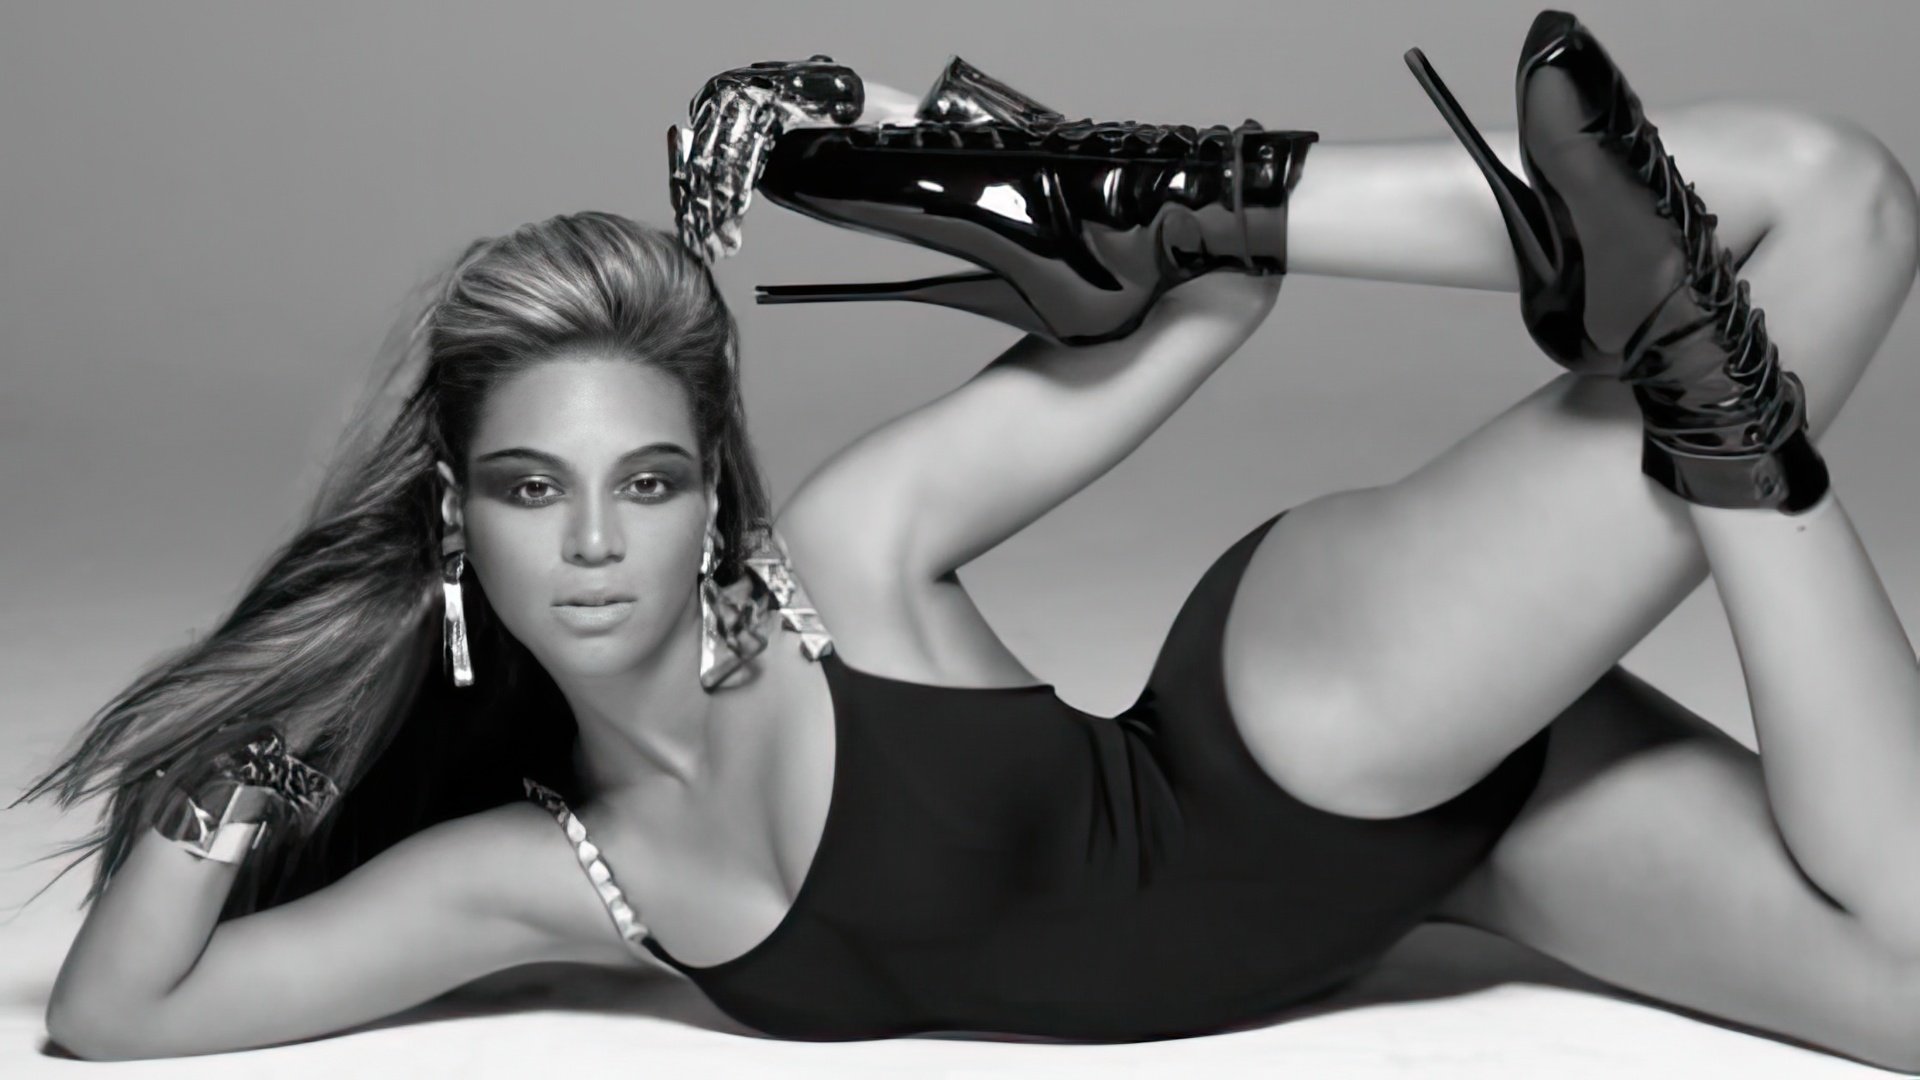 Beyoncé in the image of Sasha Fierce